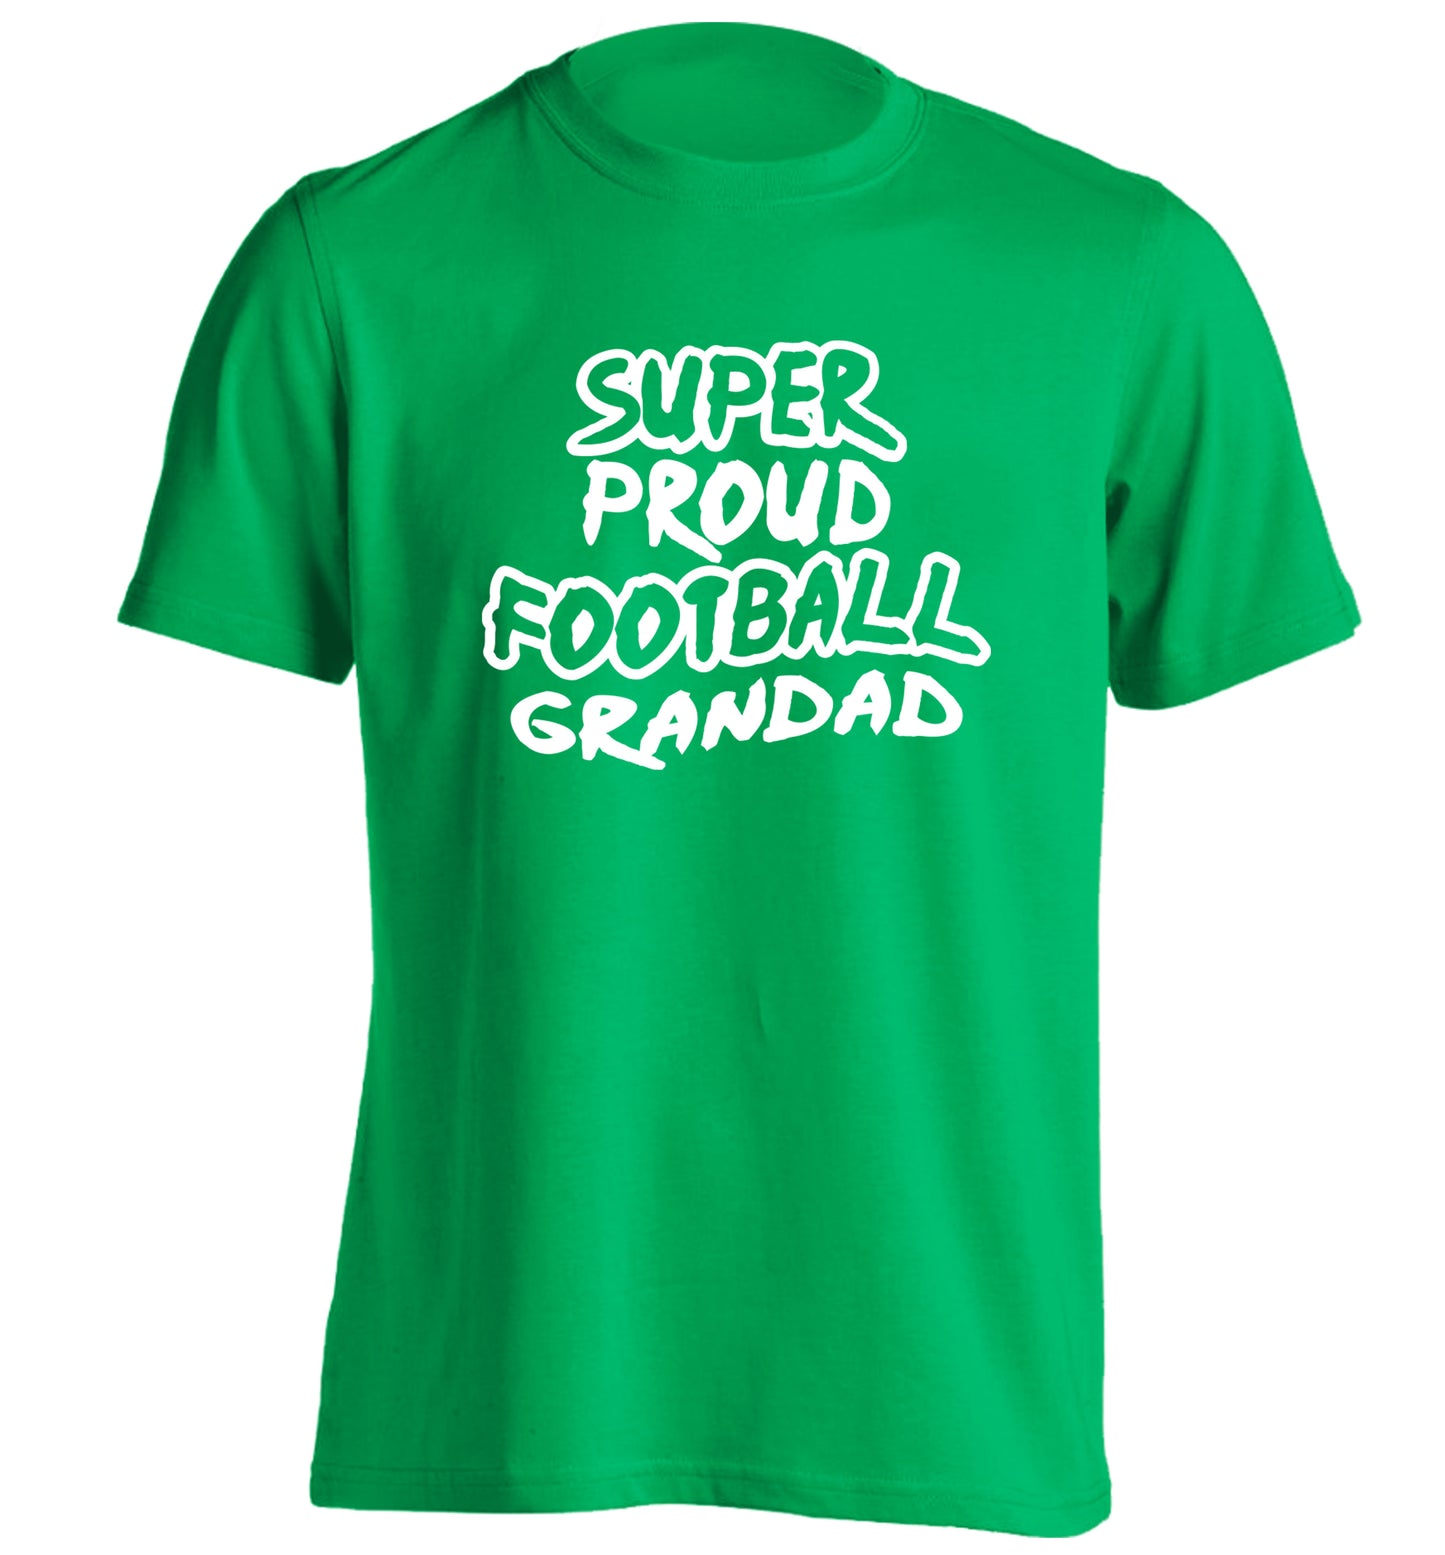 Super proud football grandad adults unisexgreen Tshirt 2XL